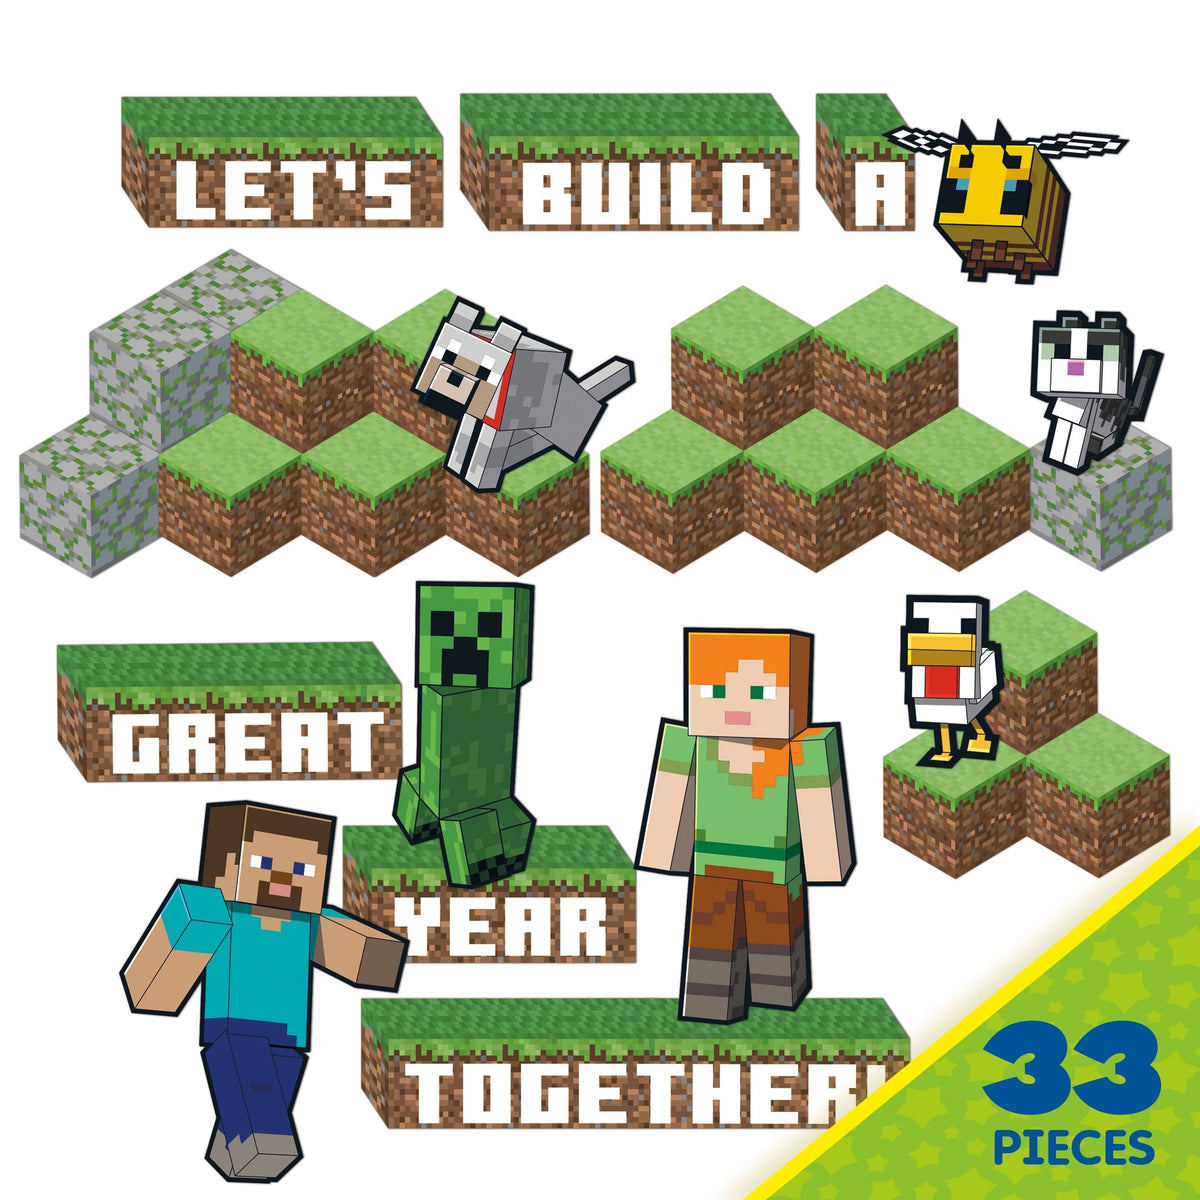 Minecraft Lets' Build A Great Year Bulletin Board Set – School House GB